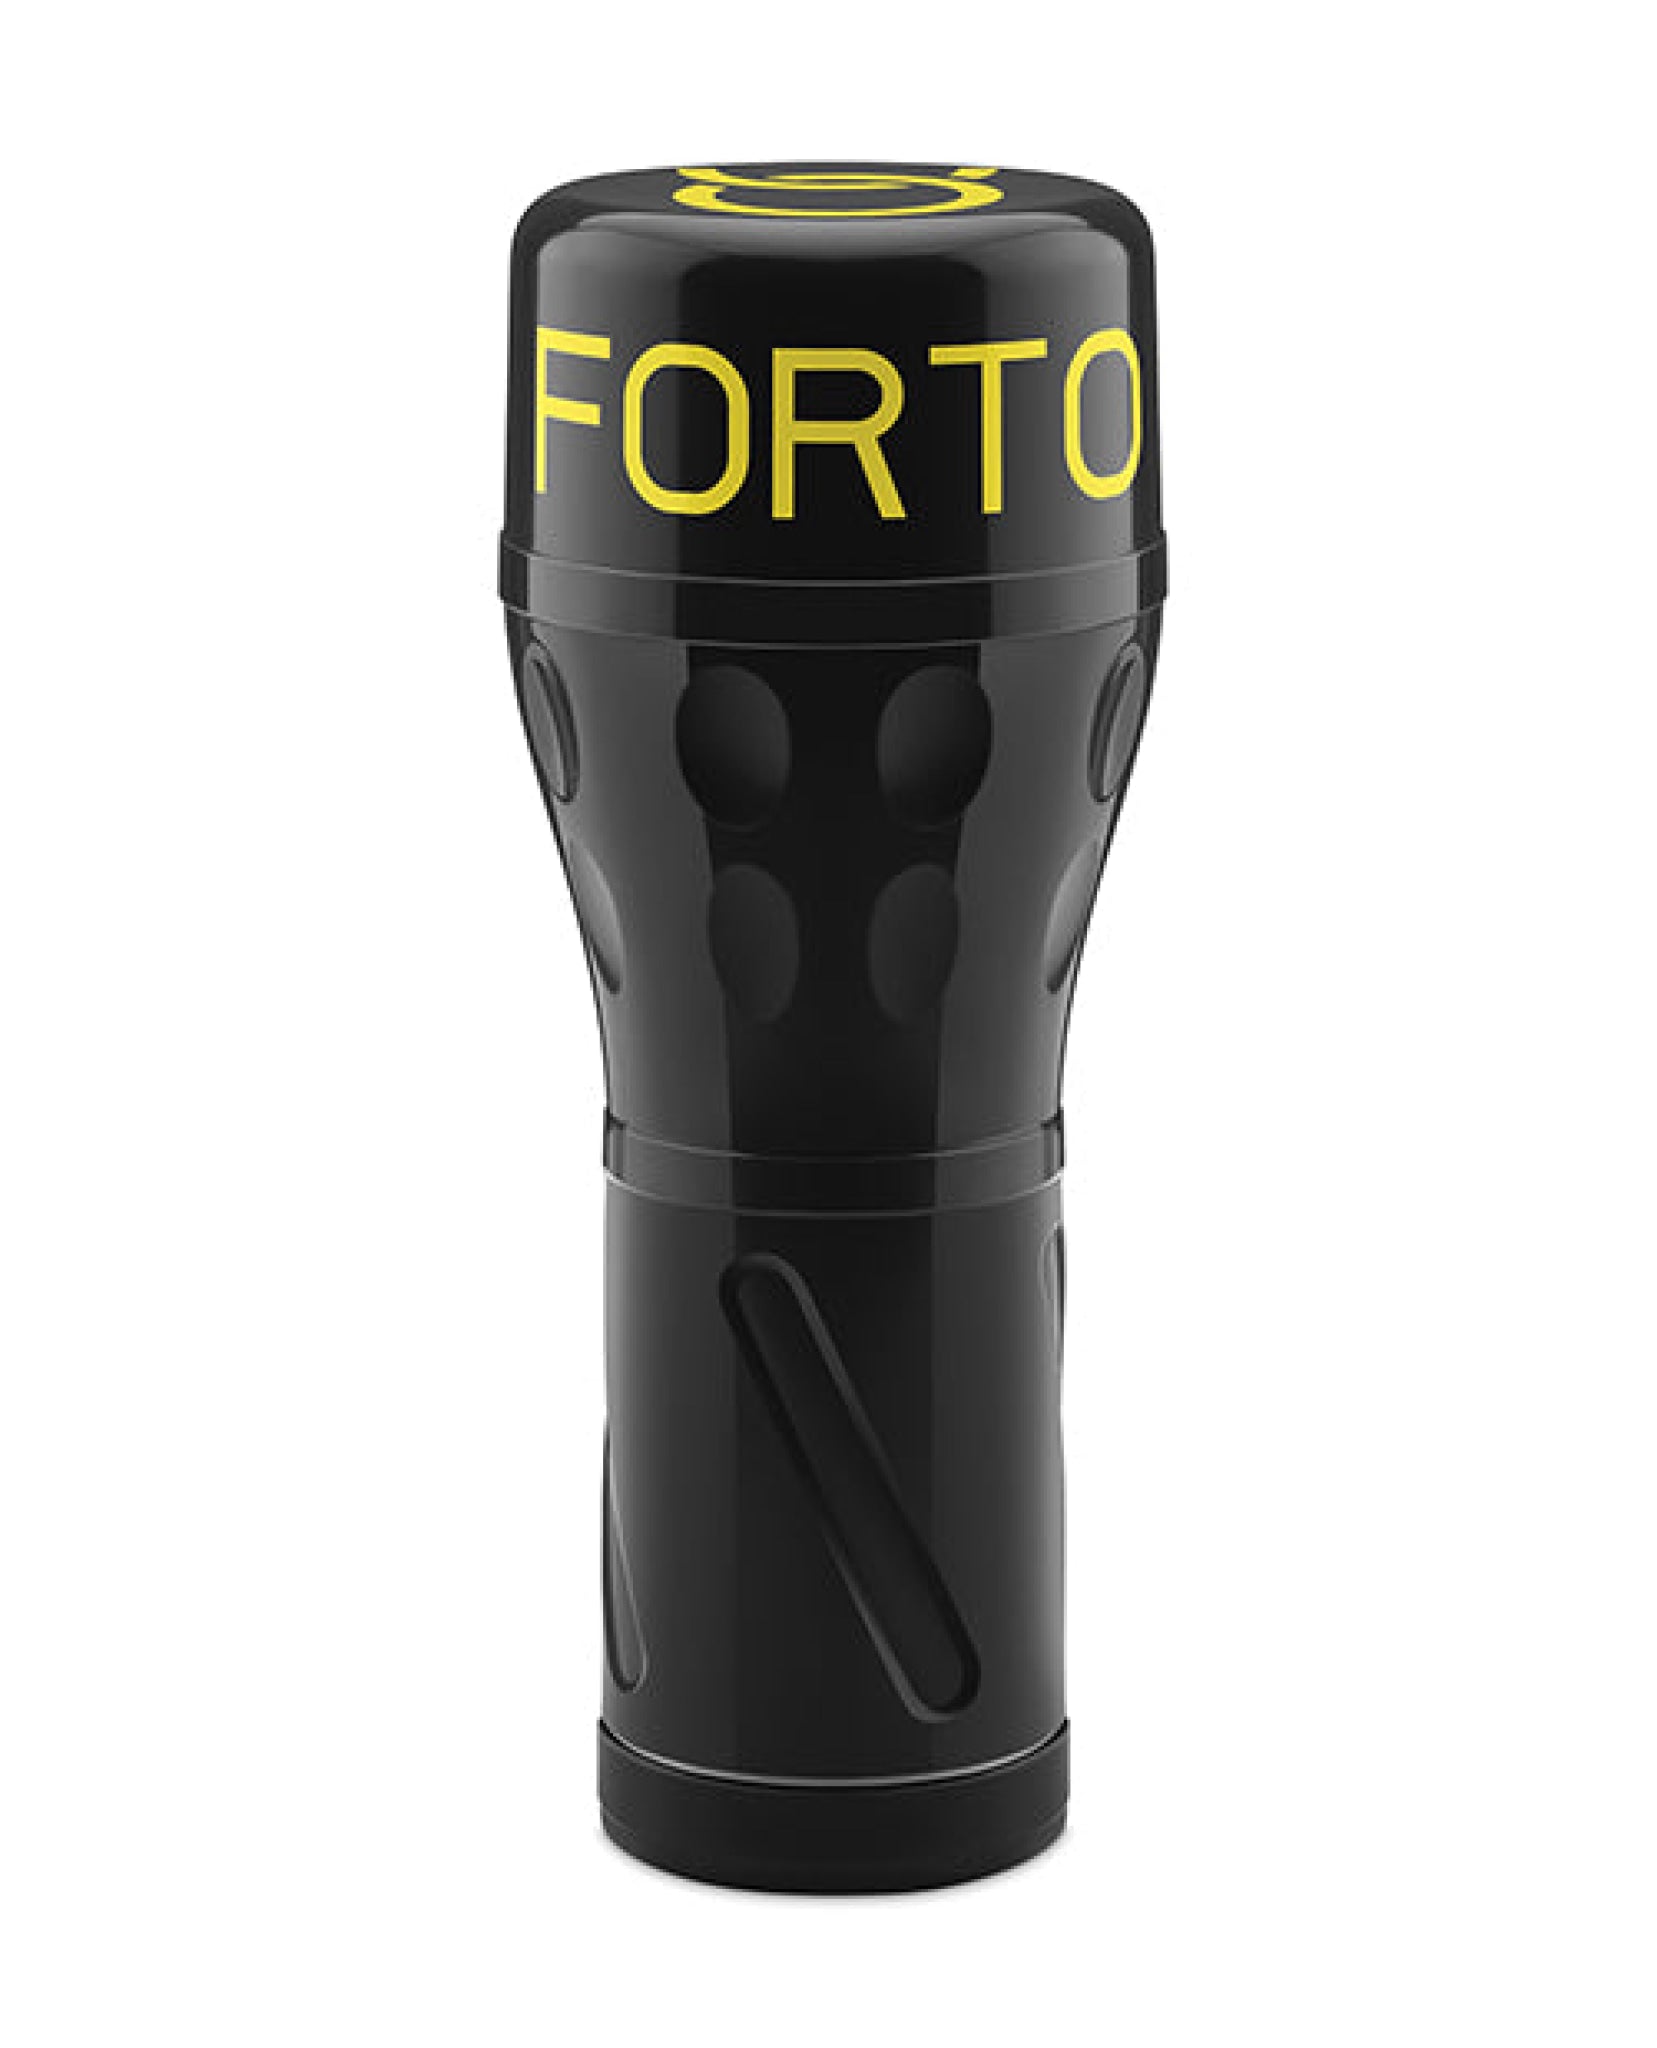 Forto Model B-02 Hard-Skin Ass Masturbator - Tan Vvole